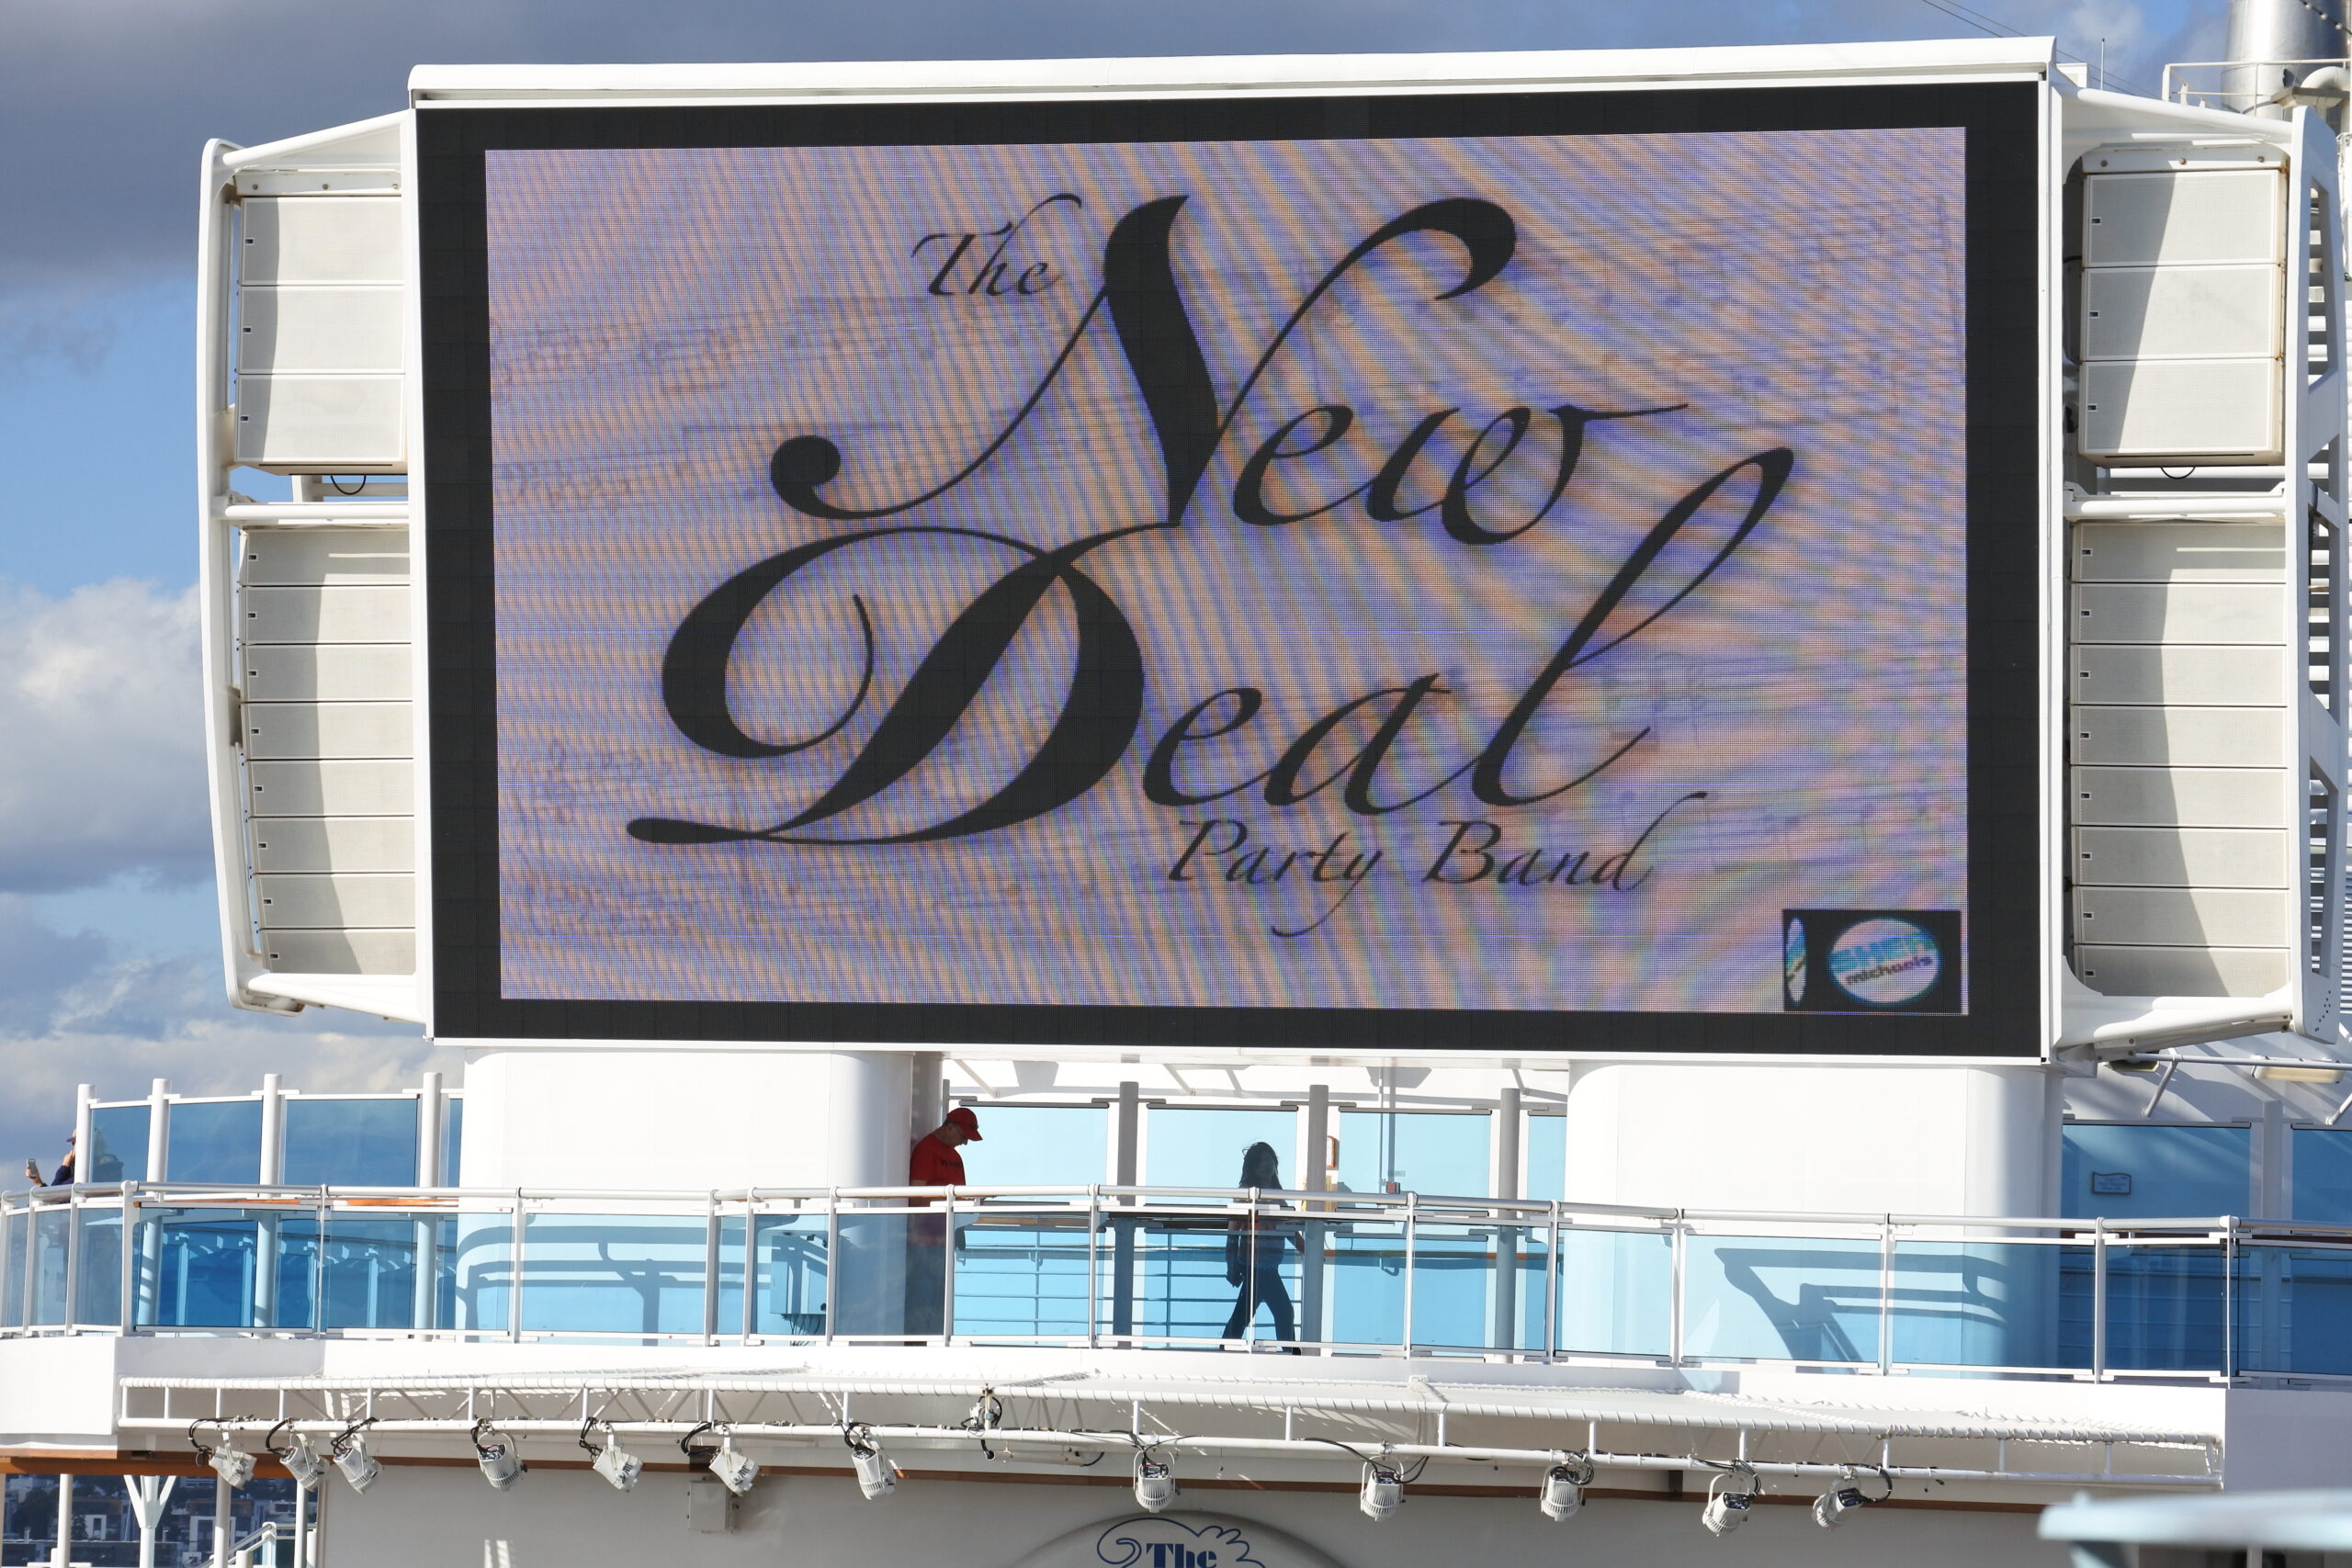 New Deal Band Detroit Yacht Rock